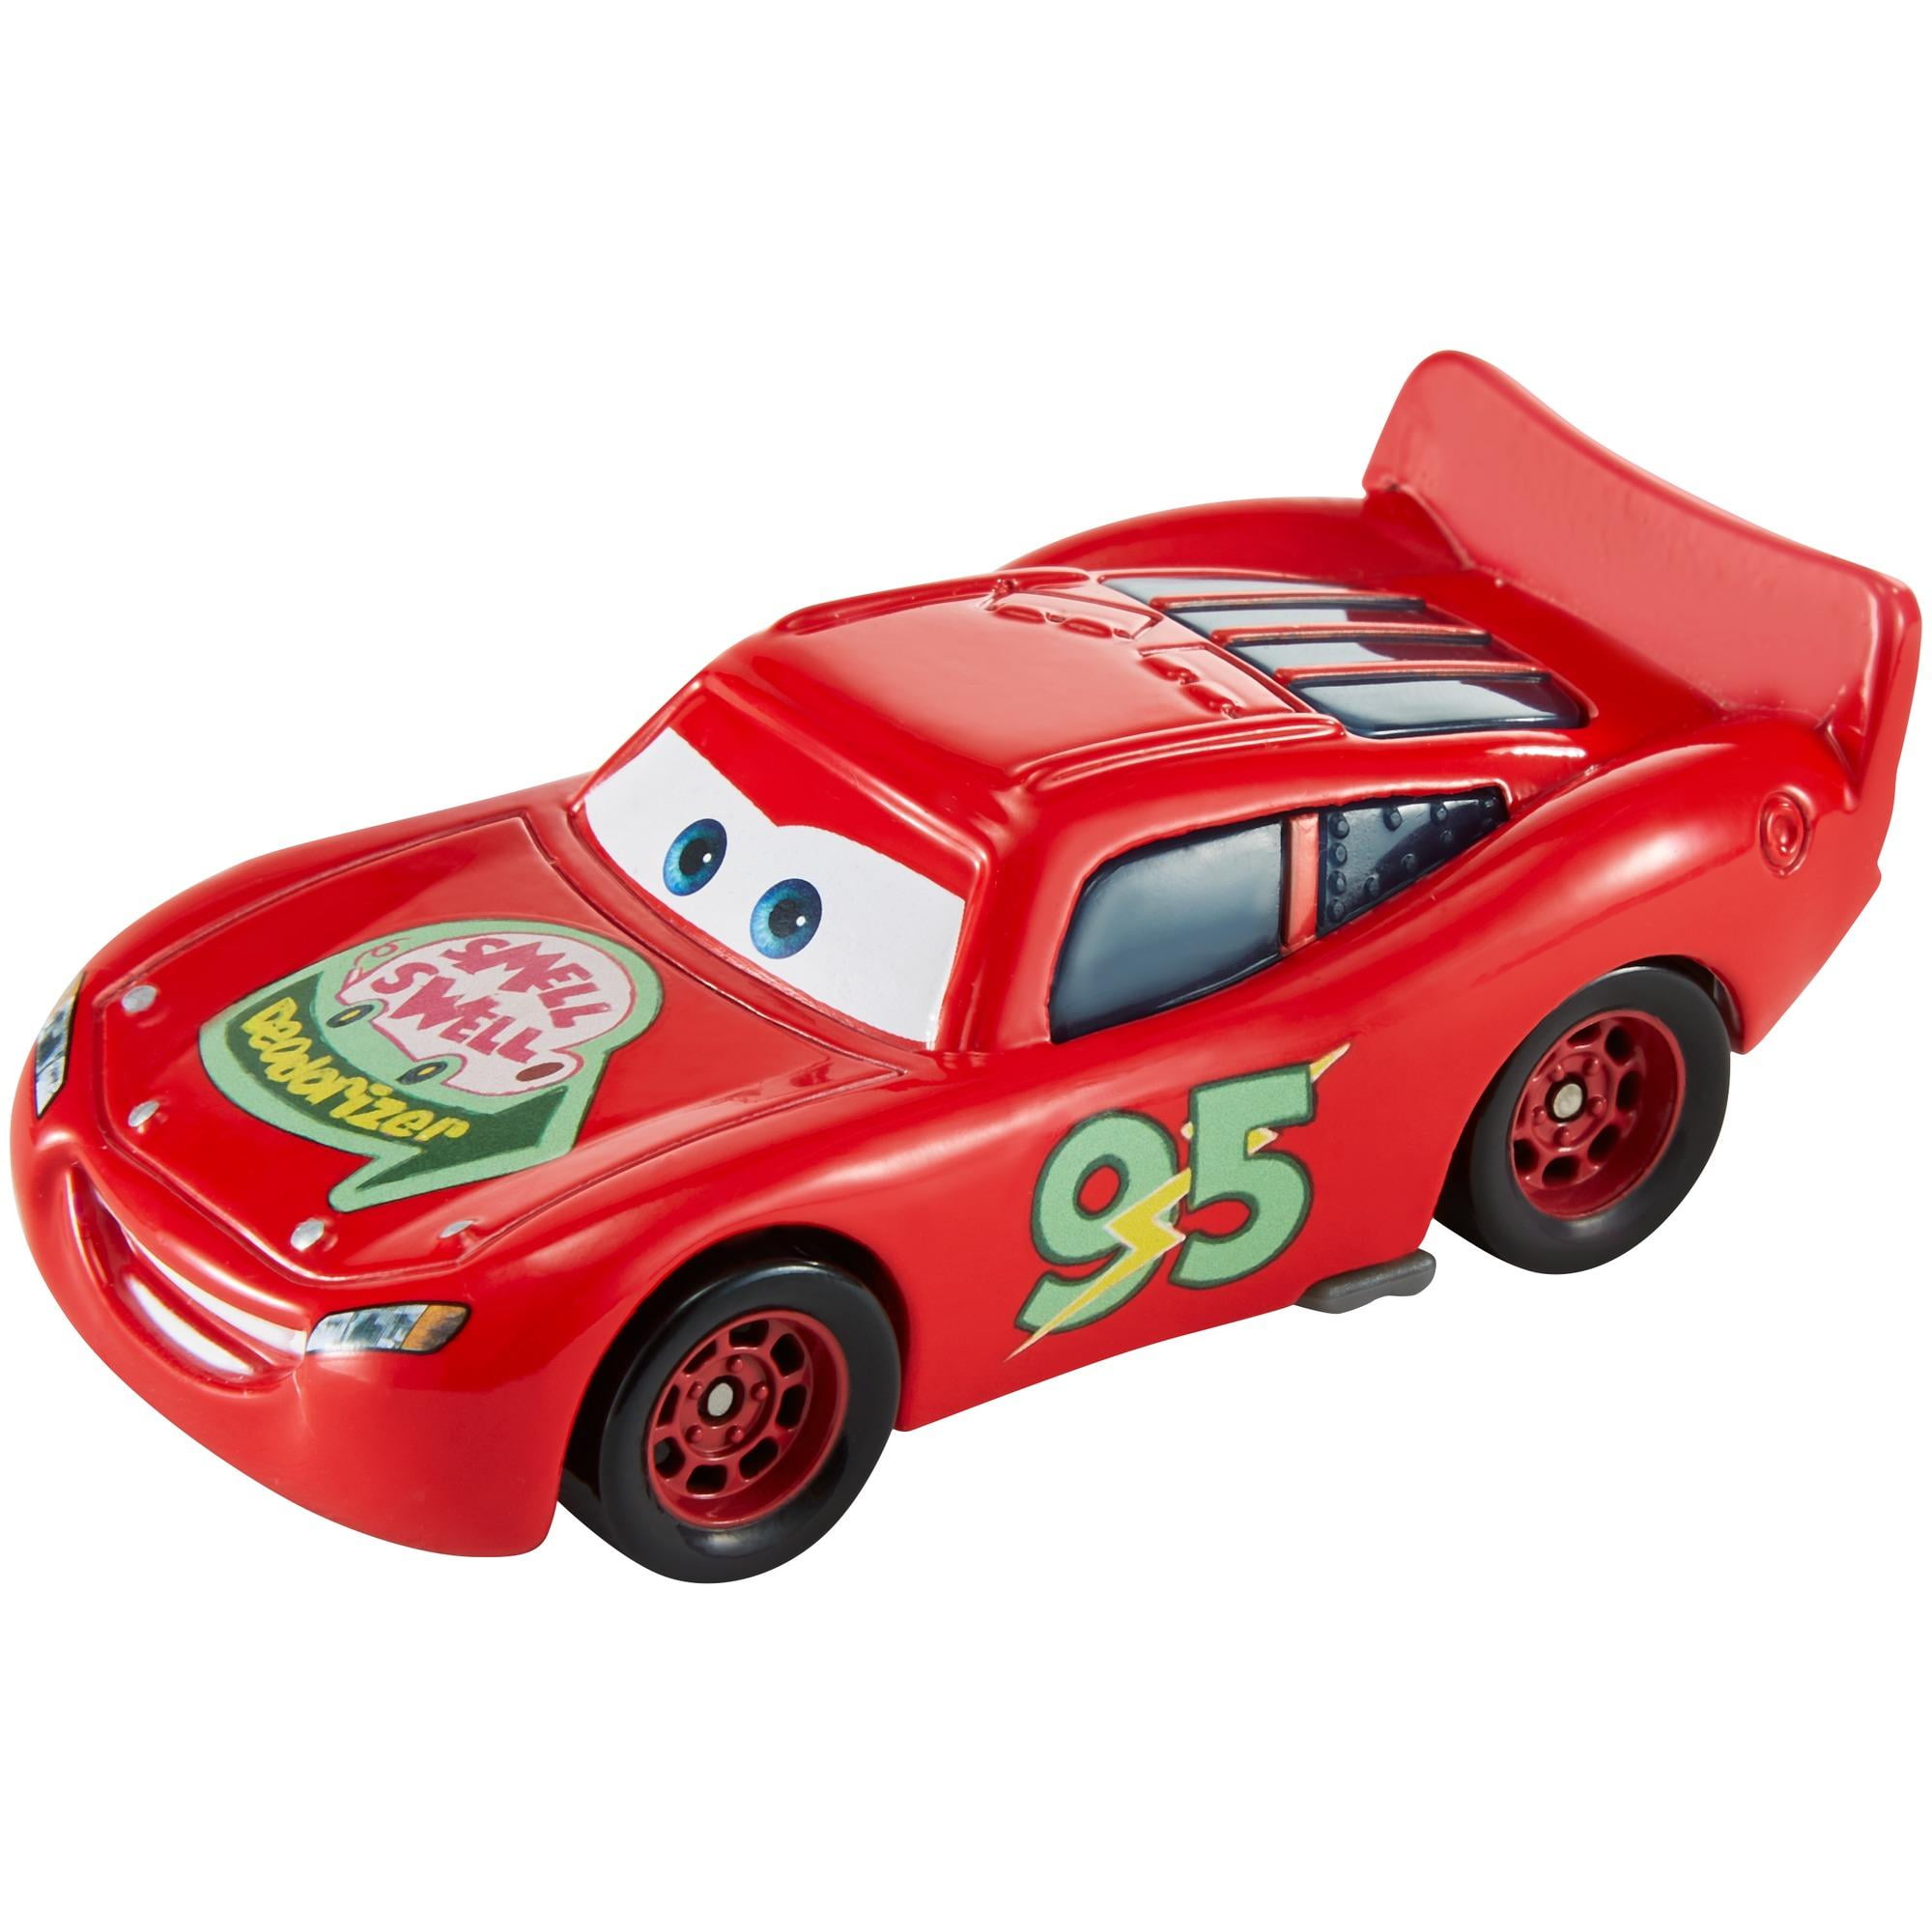 Cruz Ramirez Crazy 8 Crasher Car Mattel Disney Pixar No Batteries Required Toy 